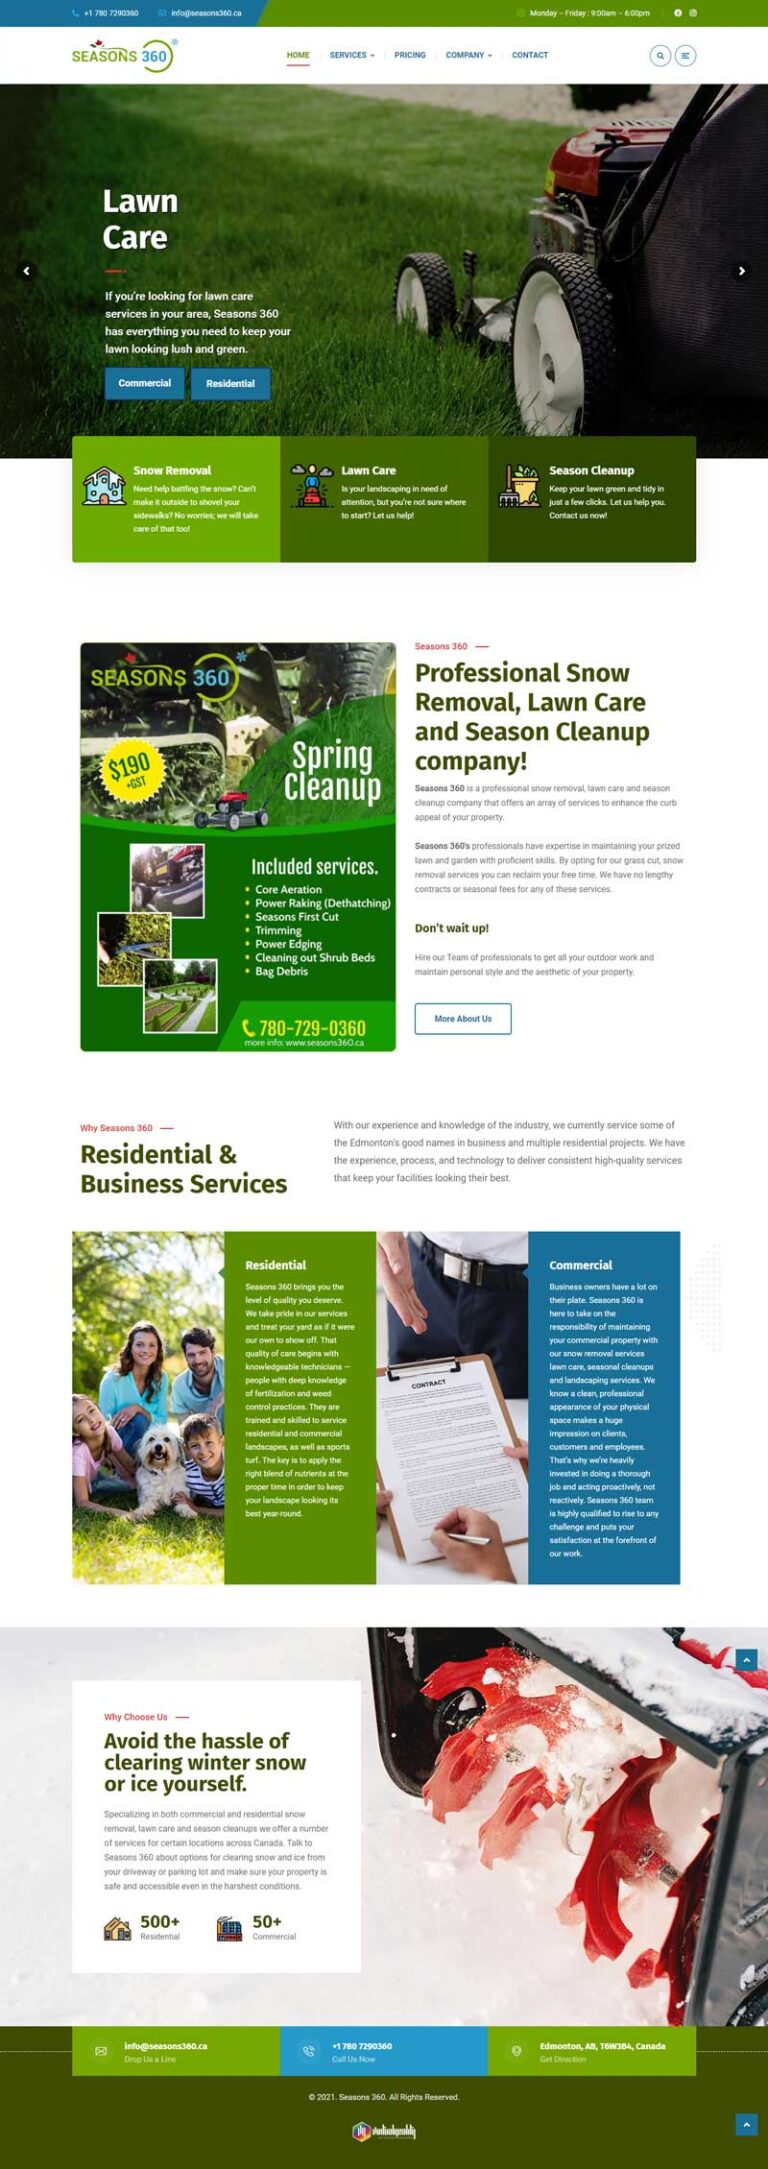 Seasons360 - SEO Services & Web Solutions